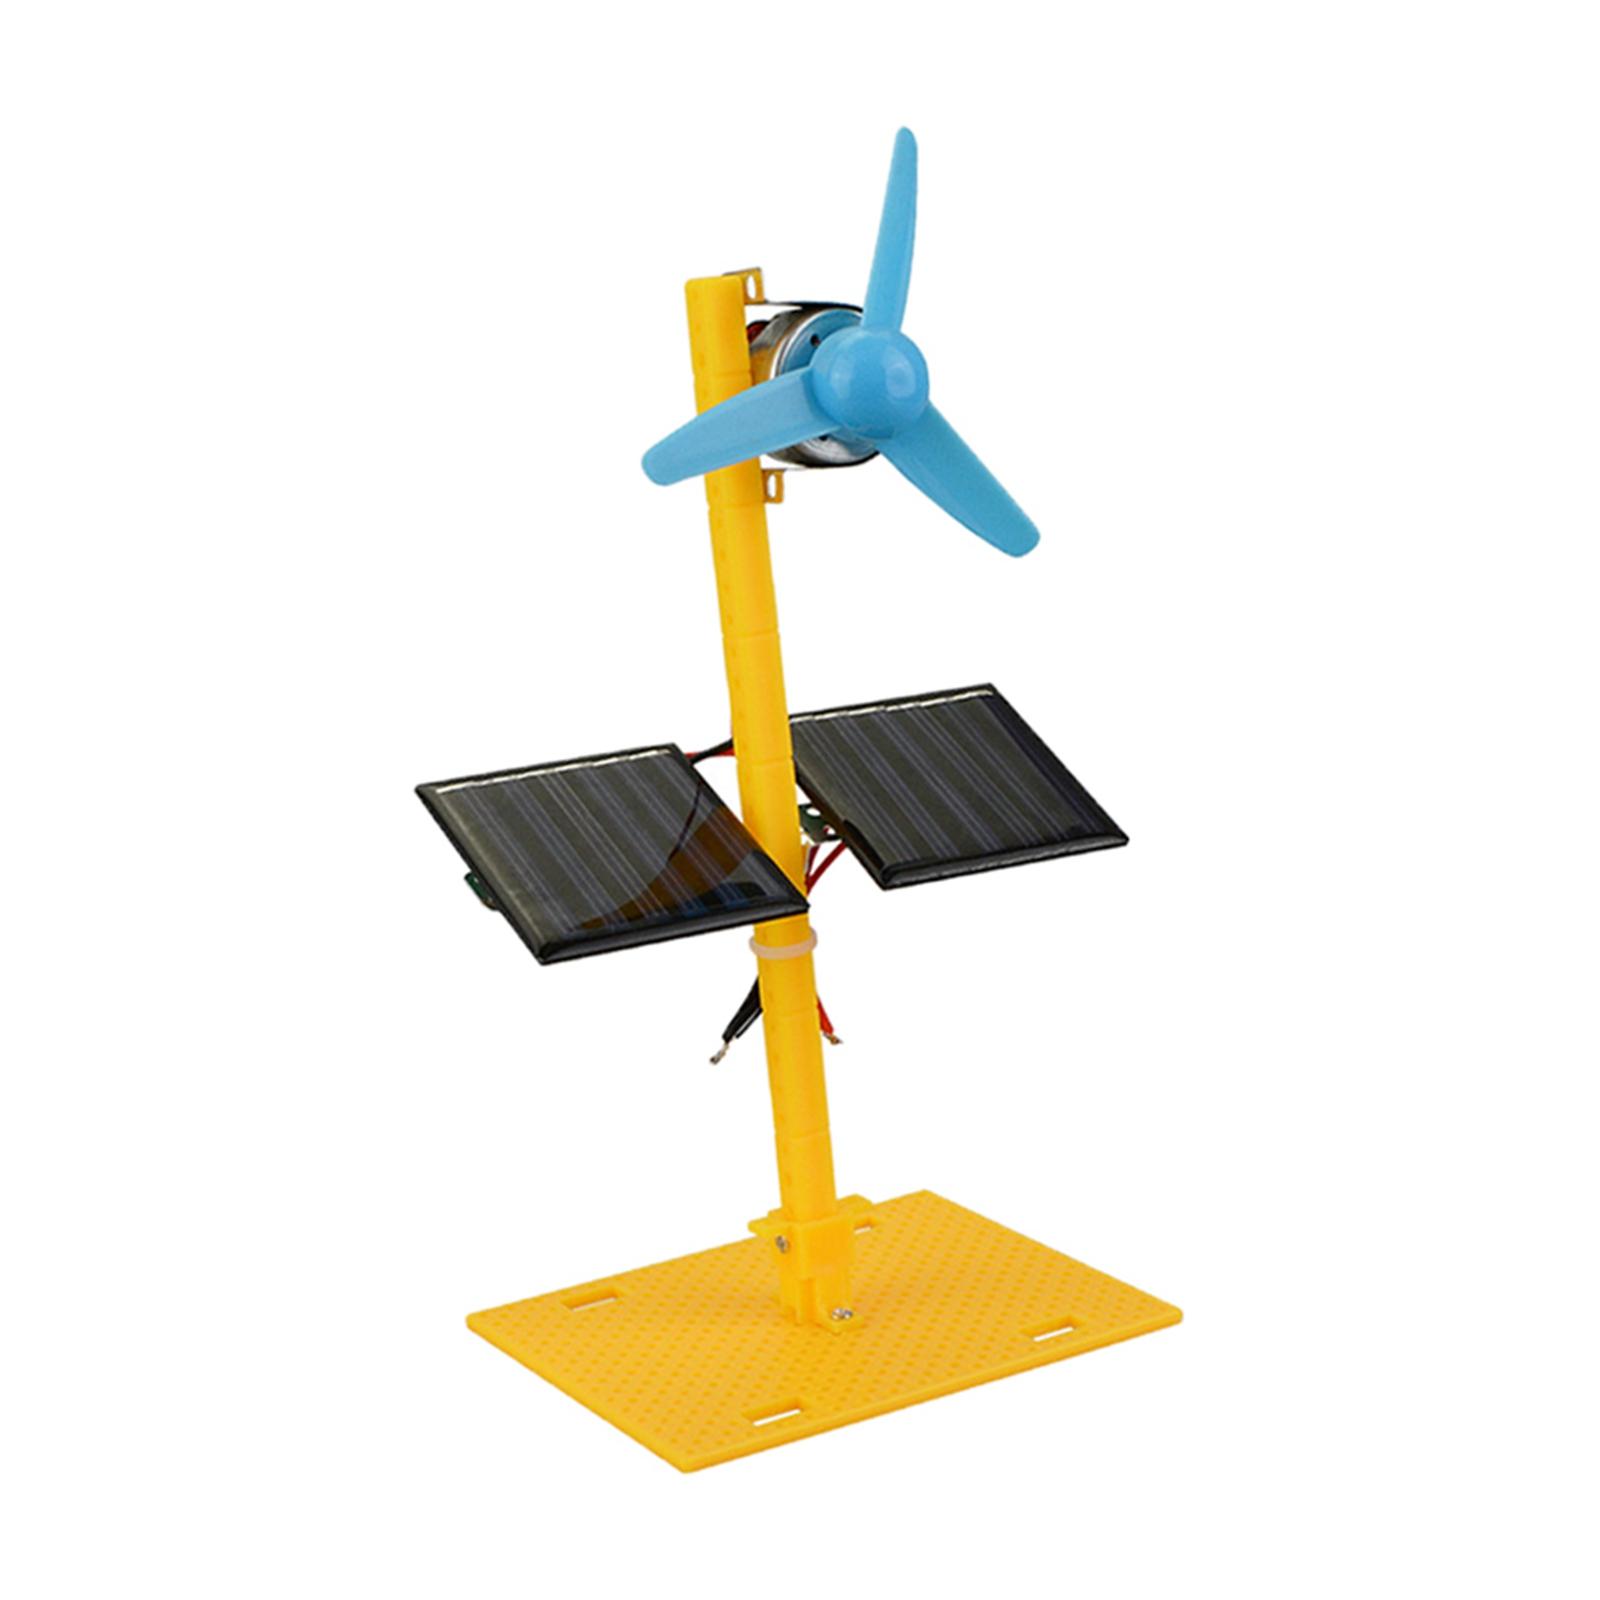 Solar Power Generator DC Motor Fan Solar Toy Science Education Model Kit DIY